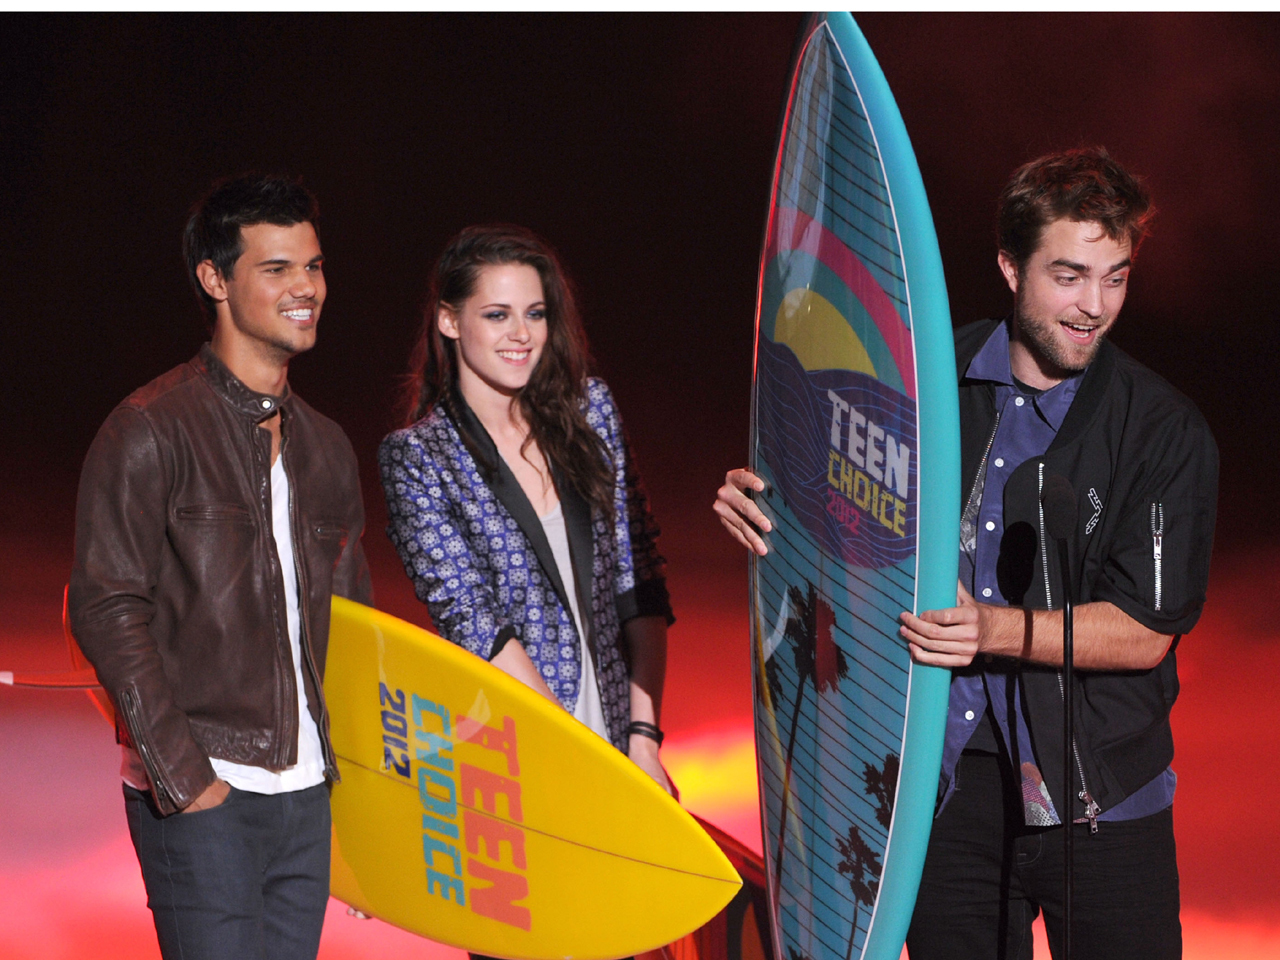 Taylor Swift Teen Choice Awards 2012